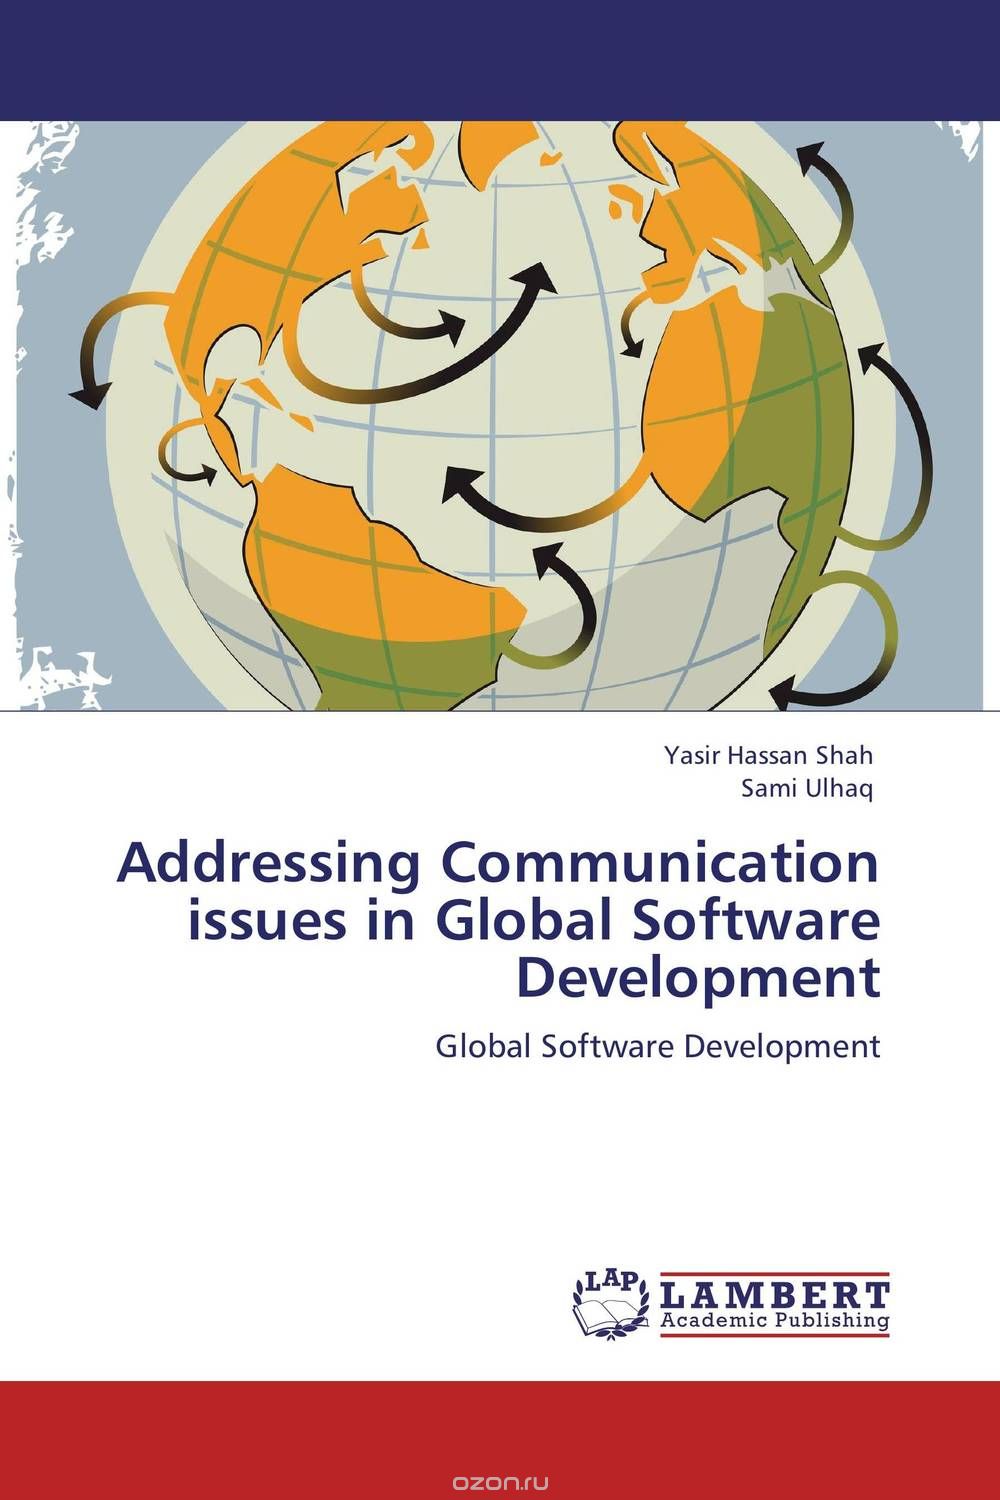 Скачать книгу "Addressing Communication issues in Global Software Development"